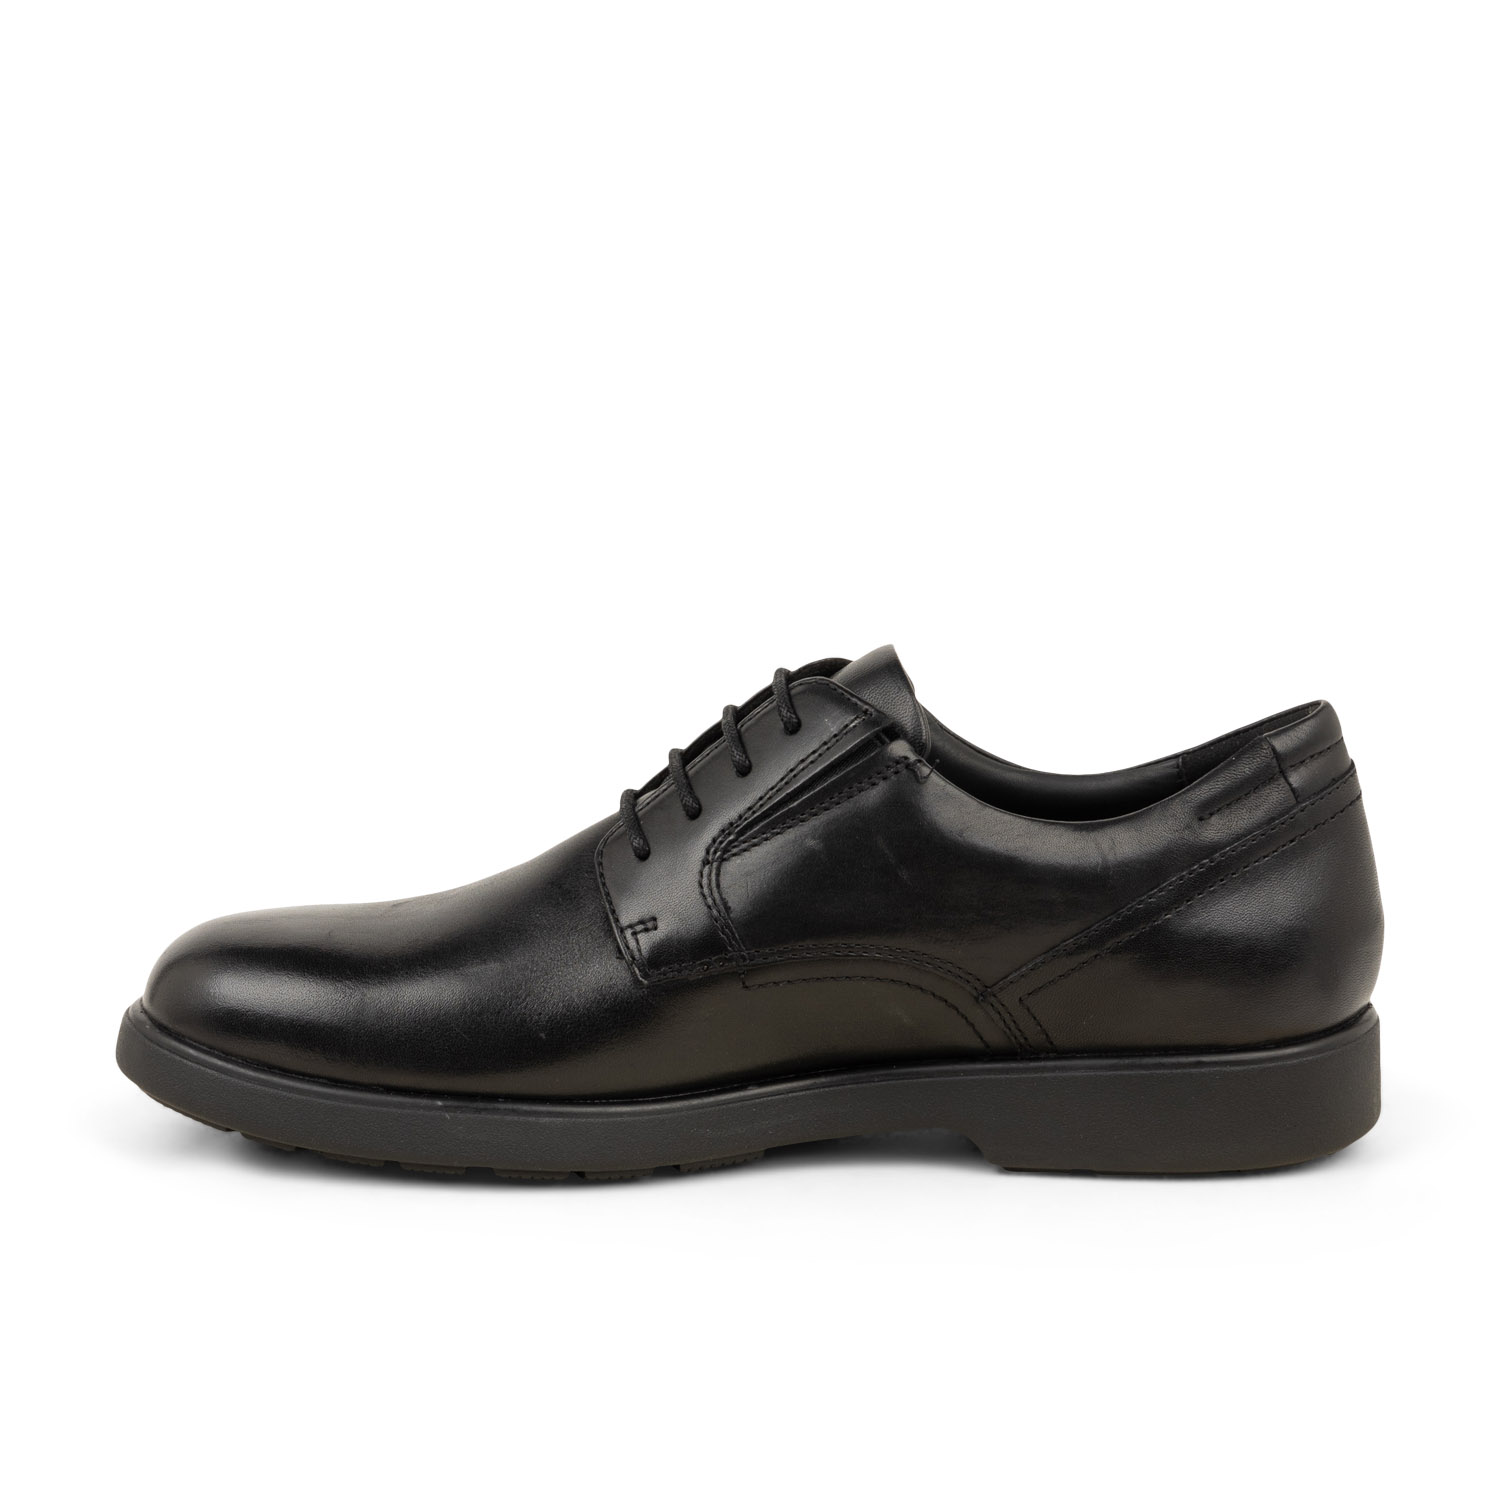 04 - SPHERICA VILLE - GEOX - Chaussures à lacets - Cuir